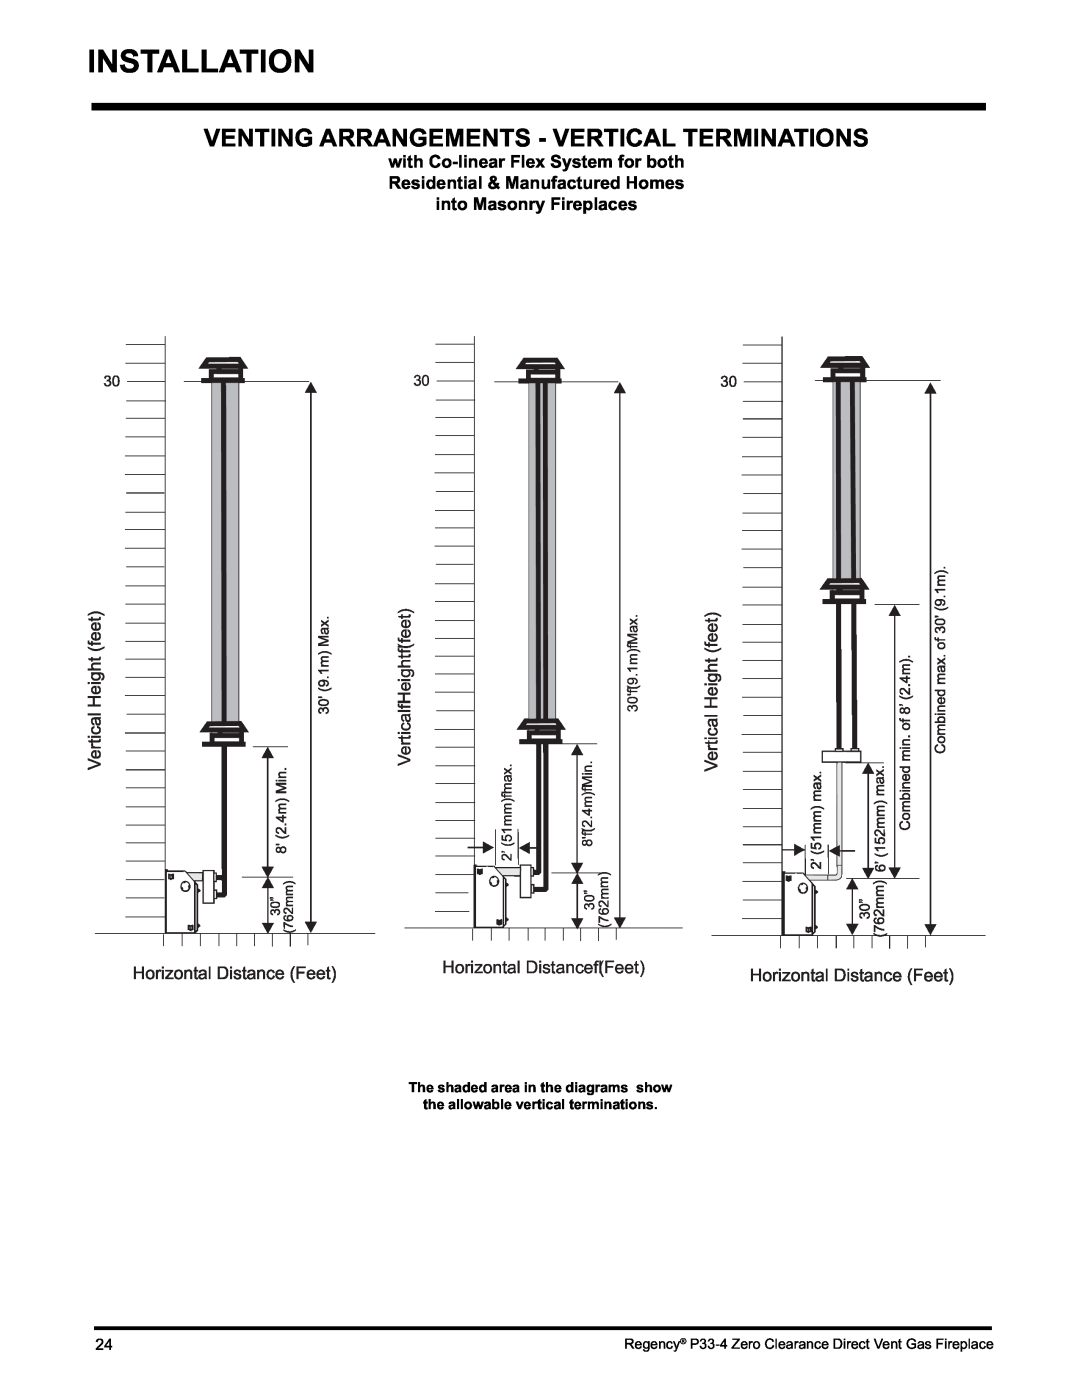 Regency P33-LP4 Installation, Venting Arrangements - Vertical Terminations, VerticalHeightfeet, Horizontal Distance Feet 